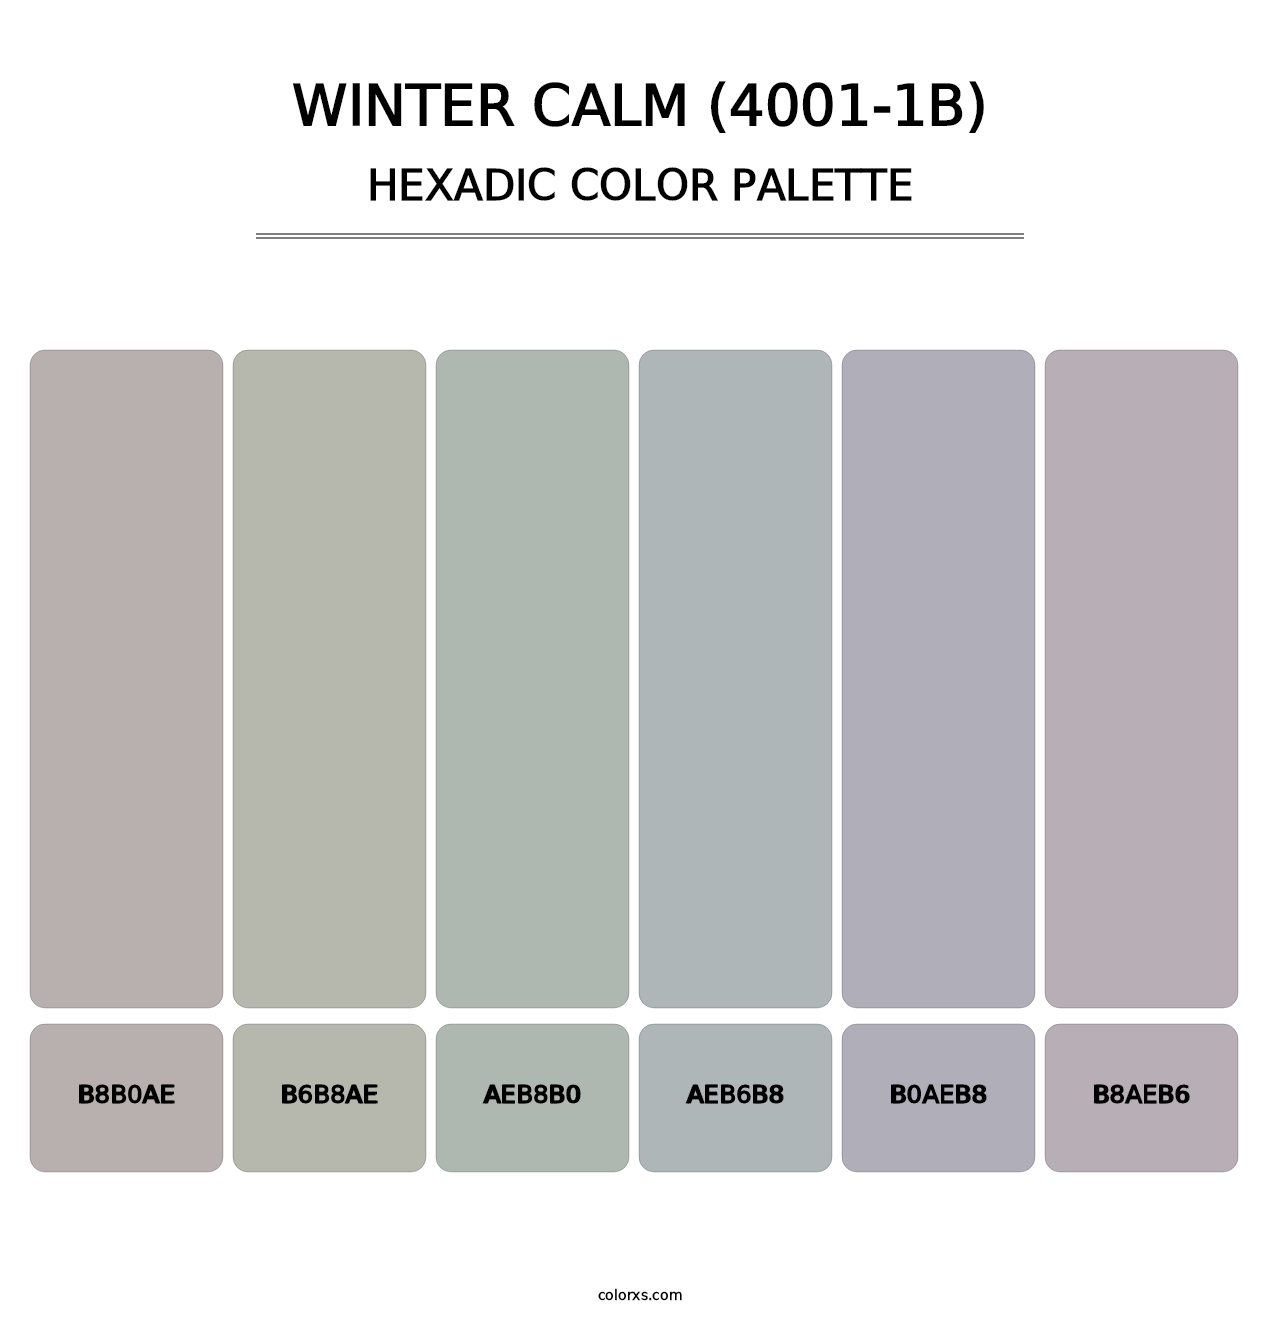 Winter Calm (4001-1B) - Hexadic Color Palette